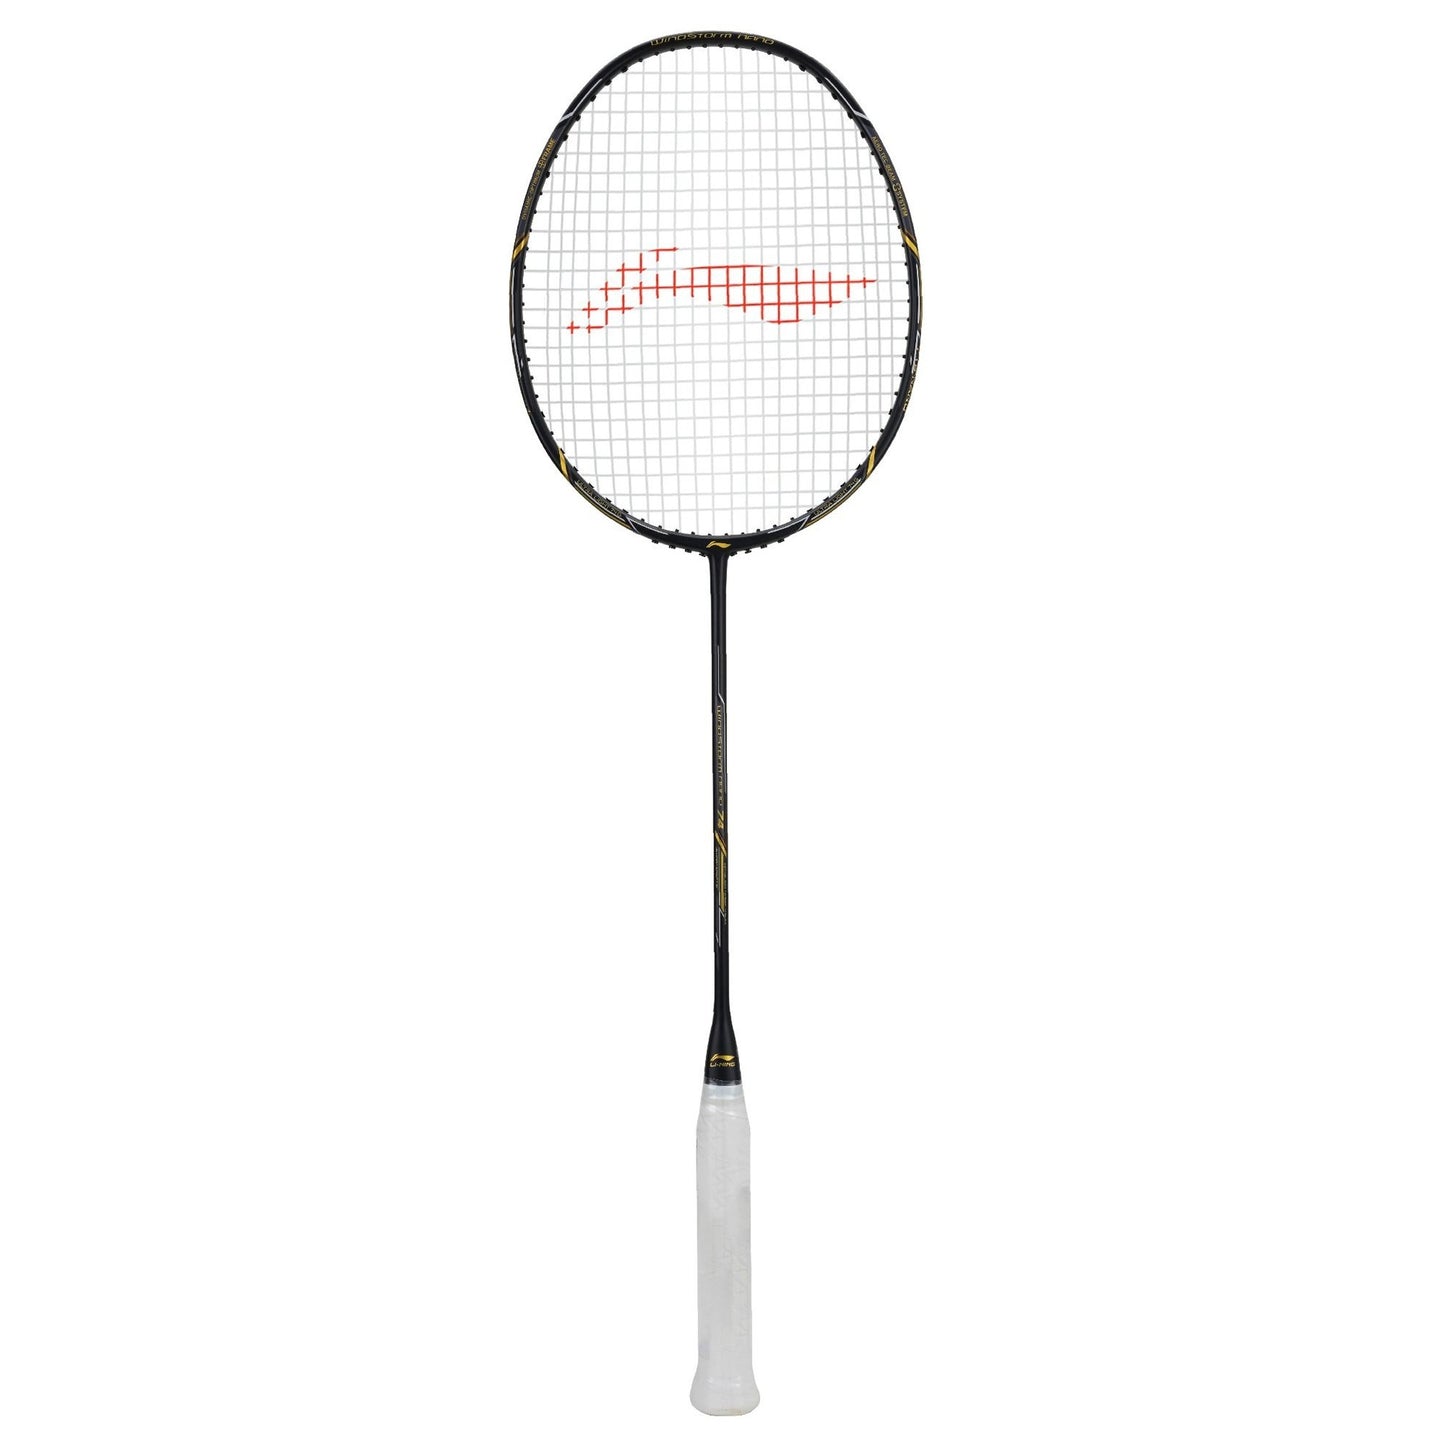 Li-Ning Windstorm Nano 74 Professional Badminton Racquet Unstrung Black/Gold - Best Price online Prokicksports.com